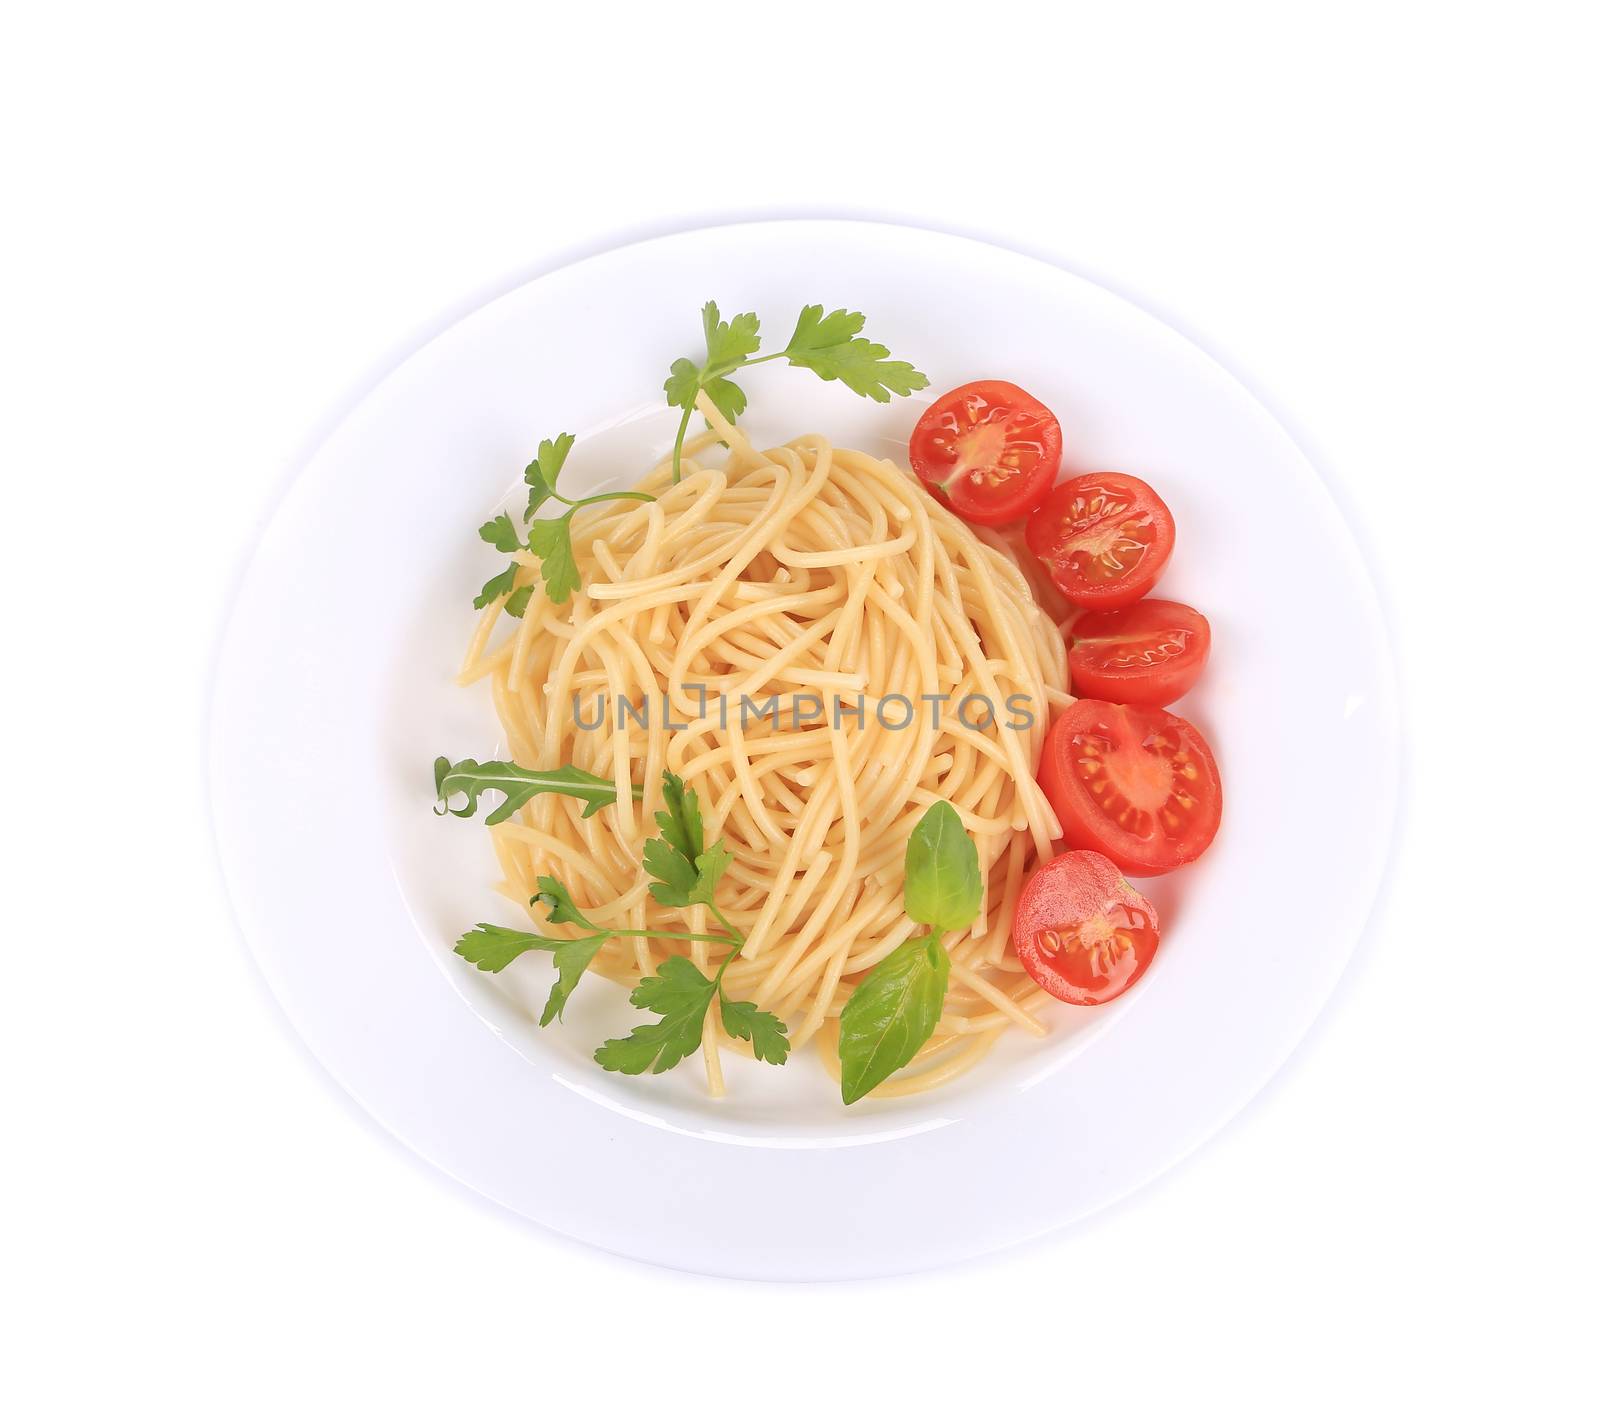 Delicious spaghetti with herbs. by indigolotos